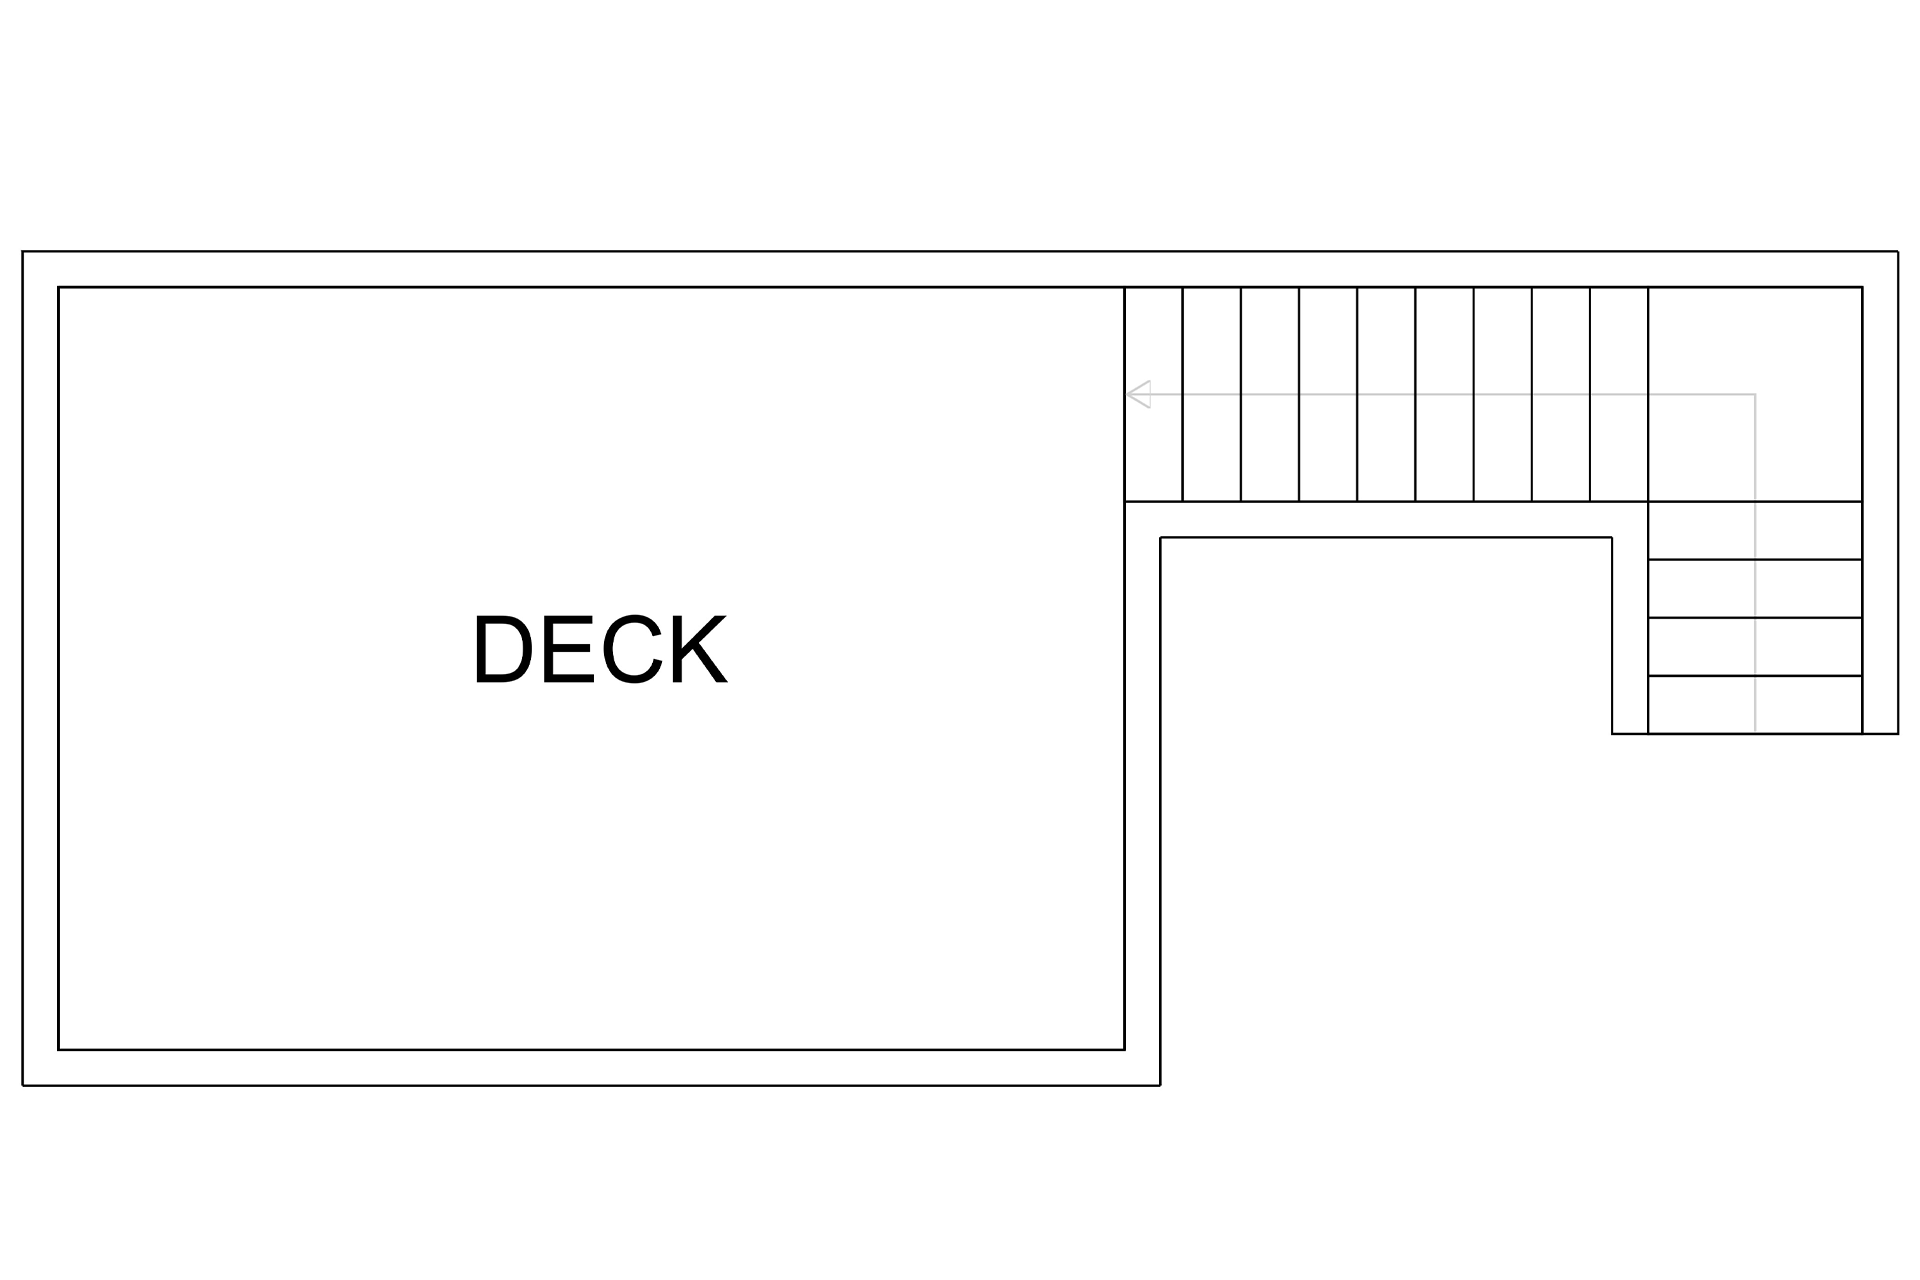 Top Level Deck 3369036